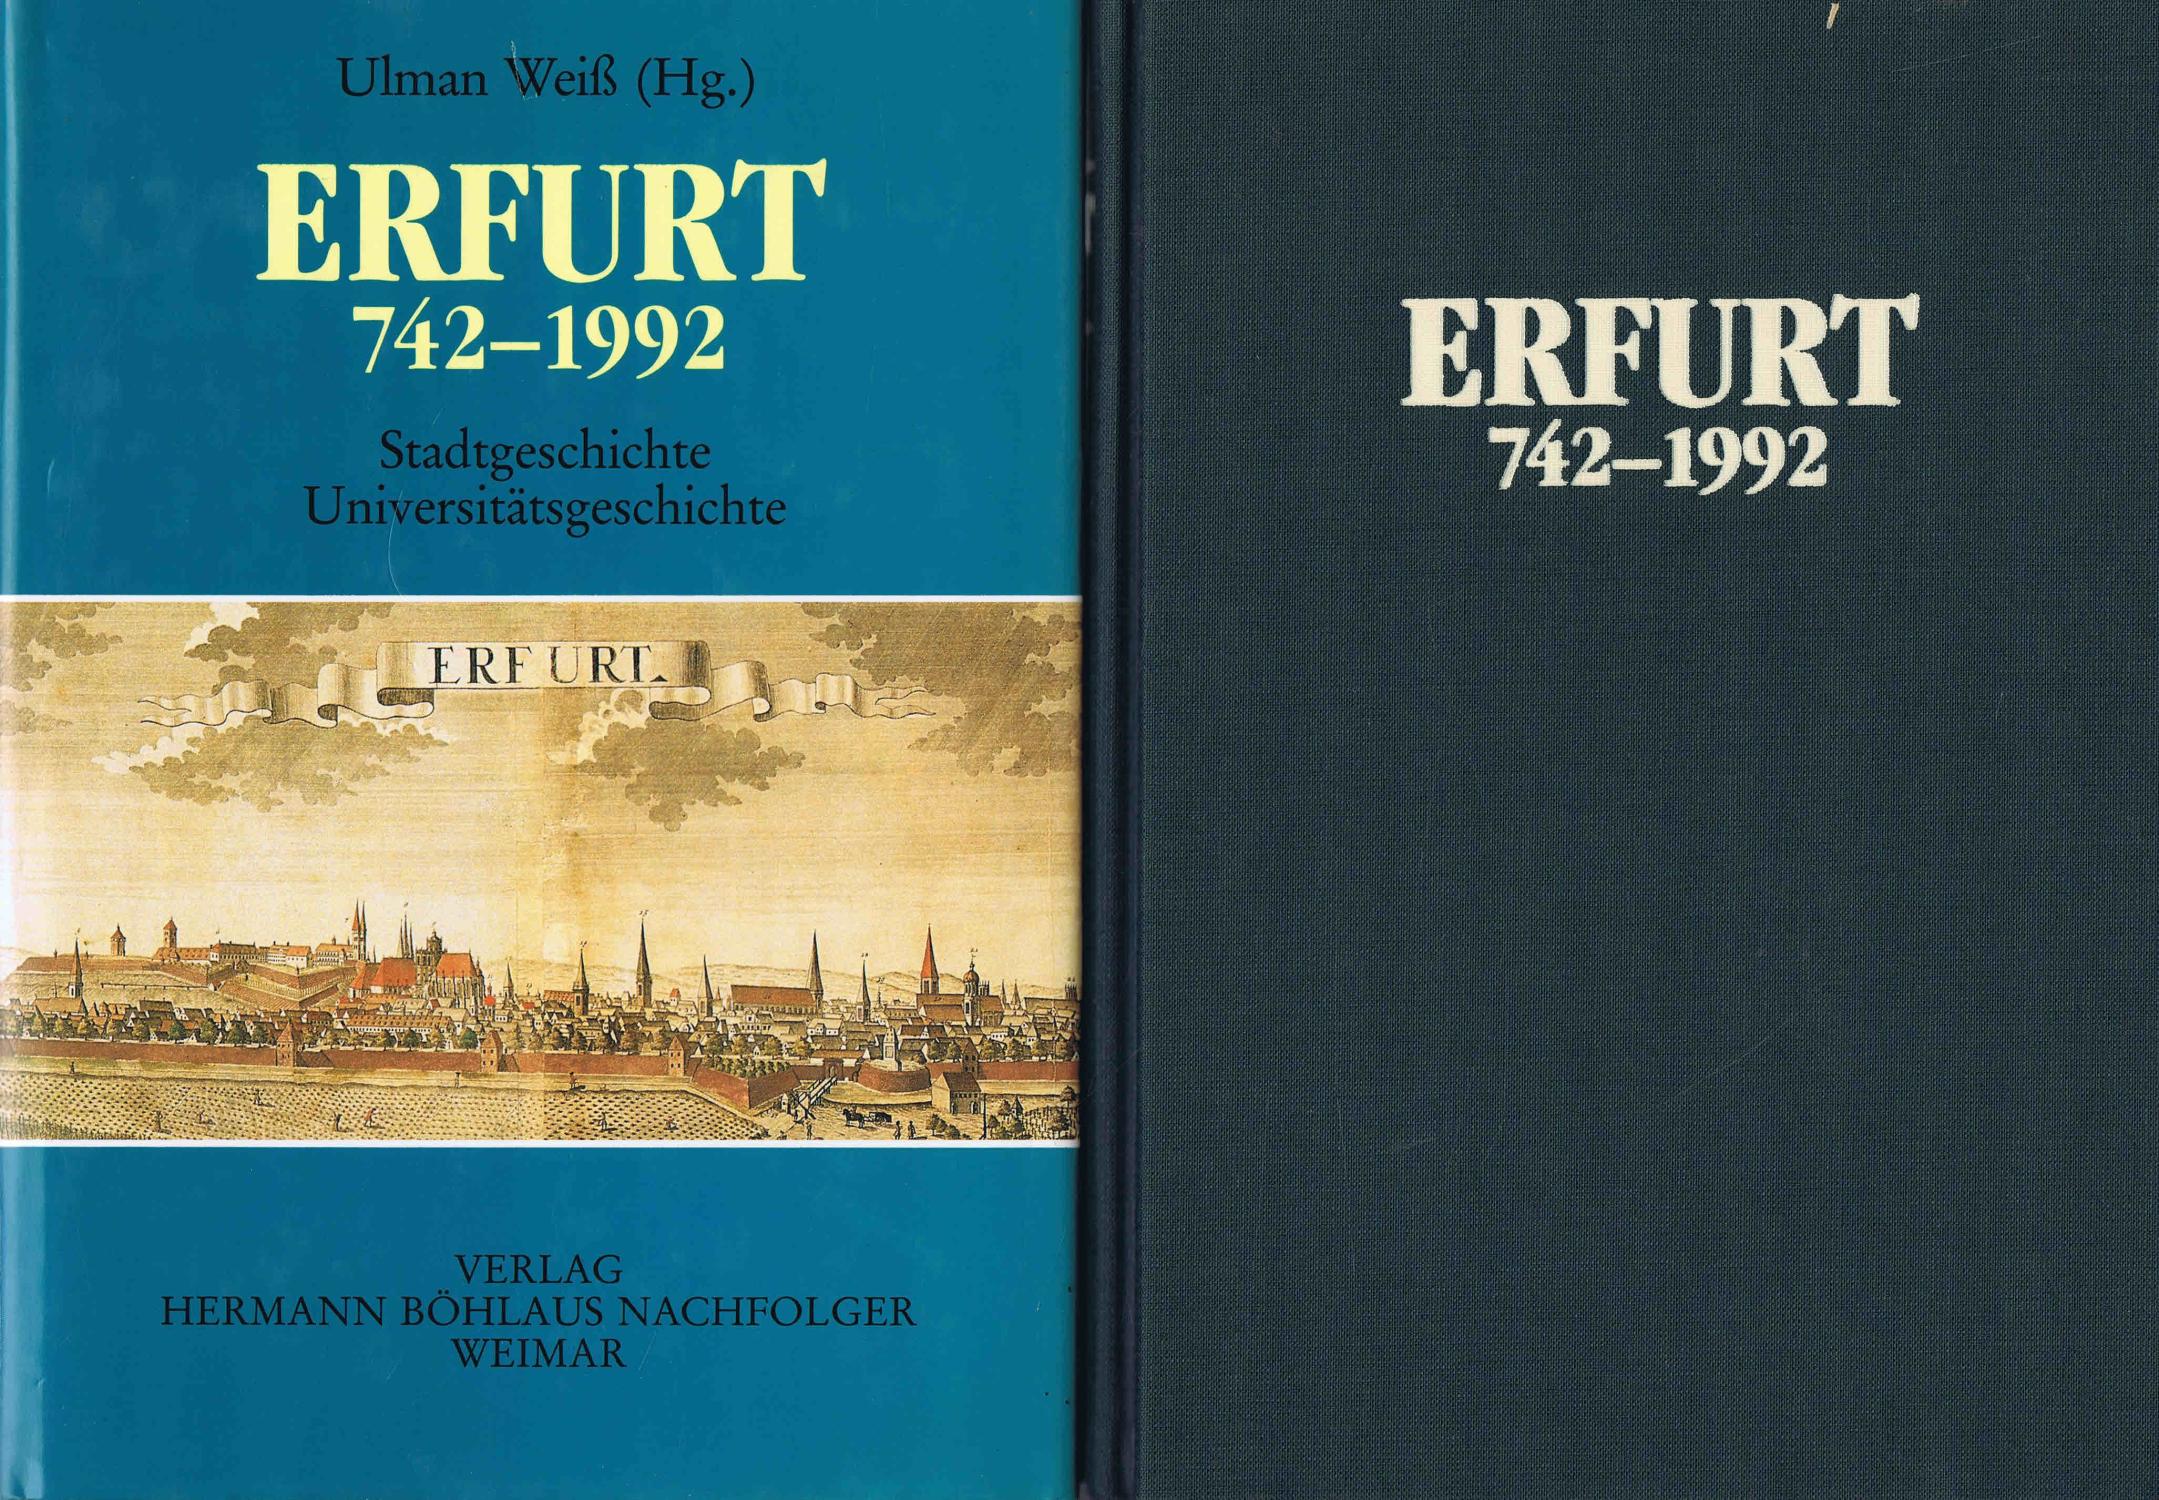 Erfurt 742-1992 (Stadtgeschichte Universitätsgeschichte) - 1992 - - Weiß, Ulman (Hg.)